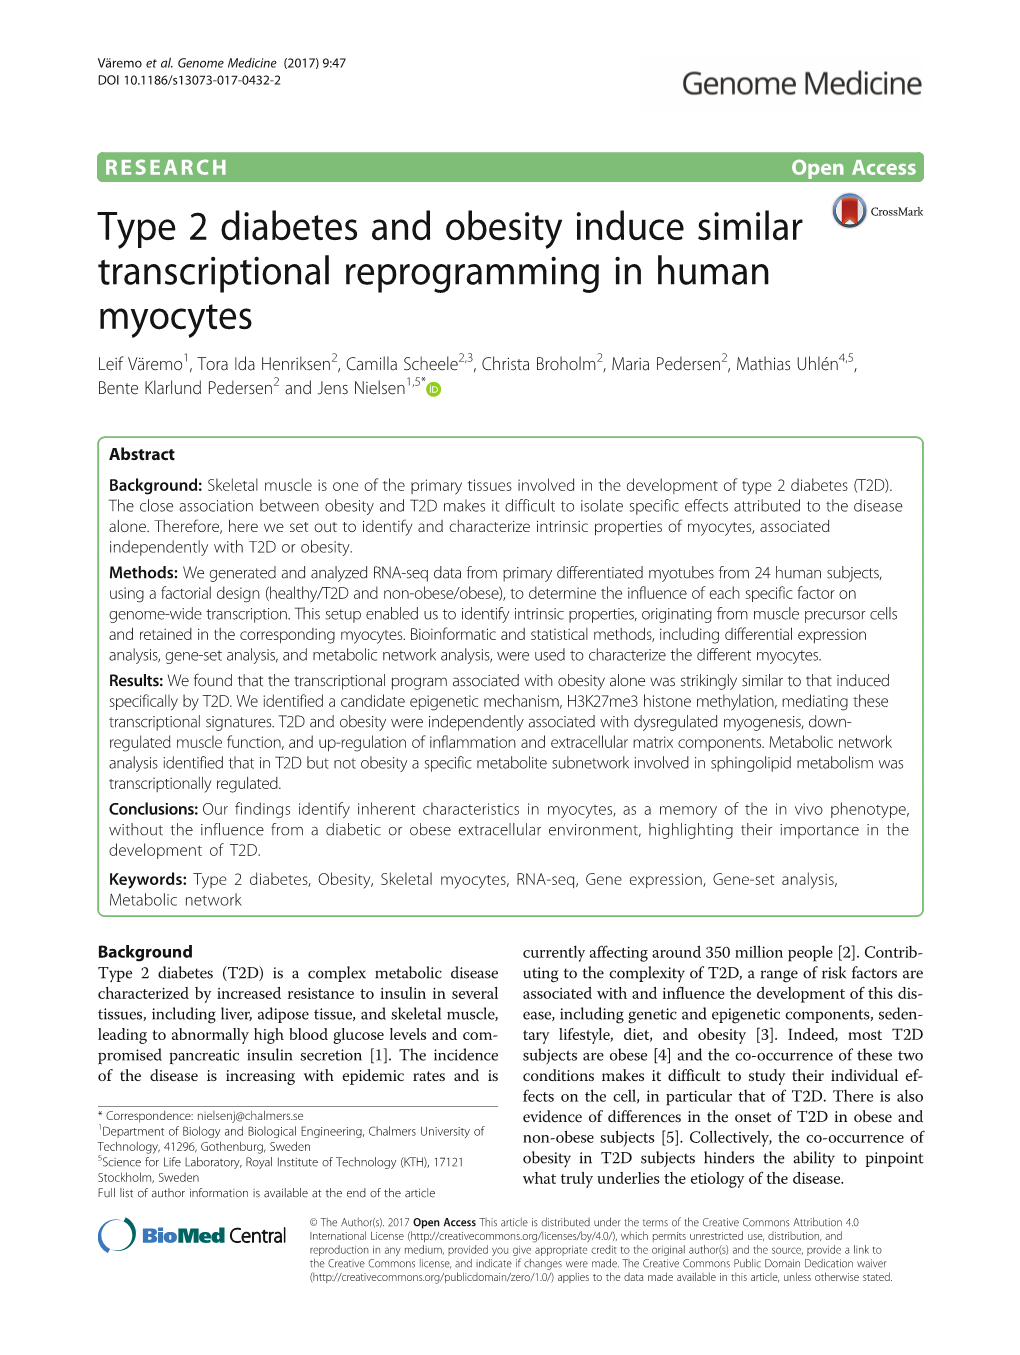 Type 2 Diabetes and Obesity Induce Similar Transcriptional